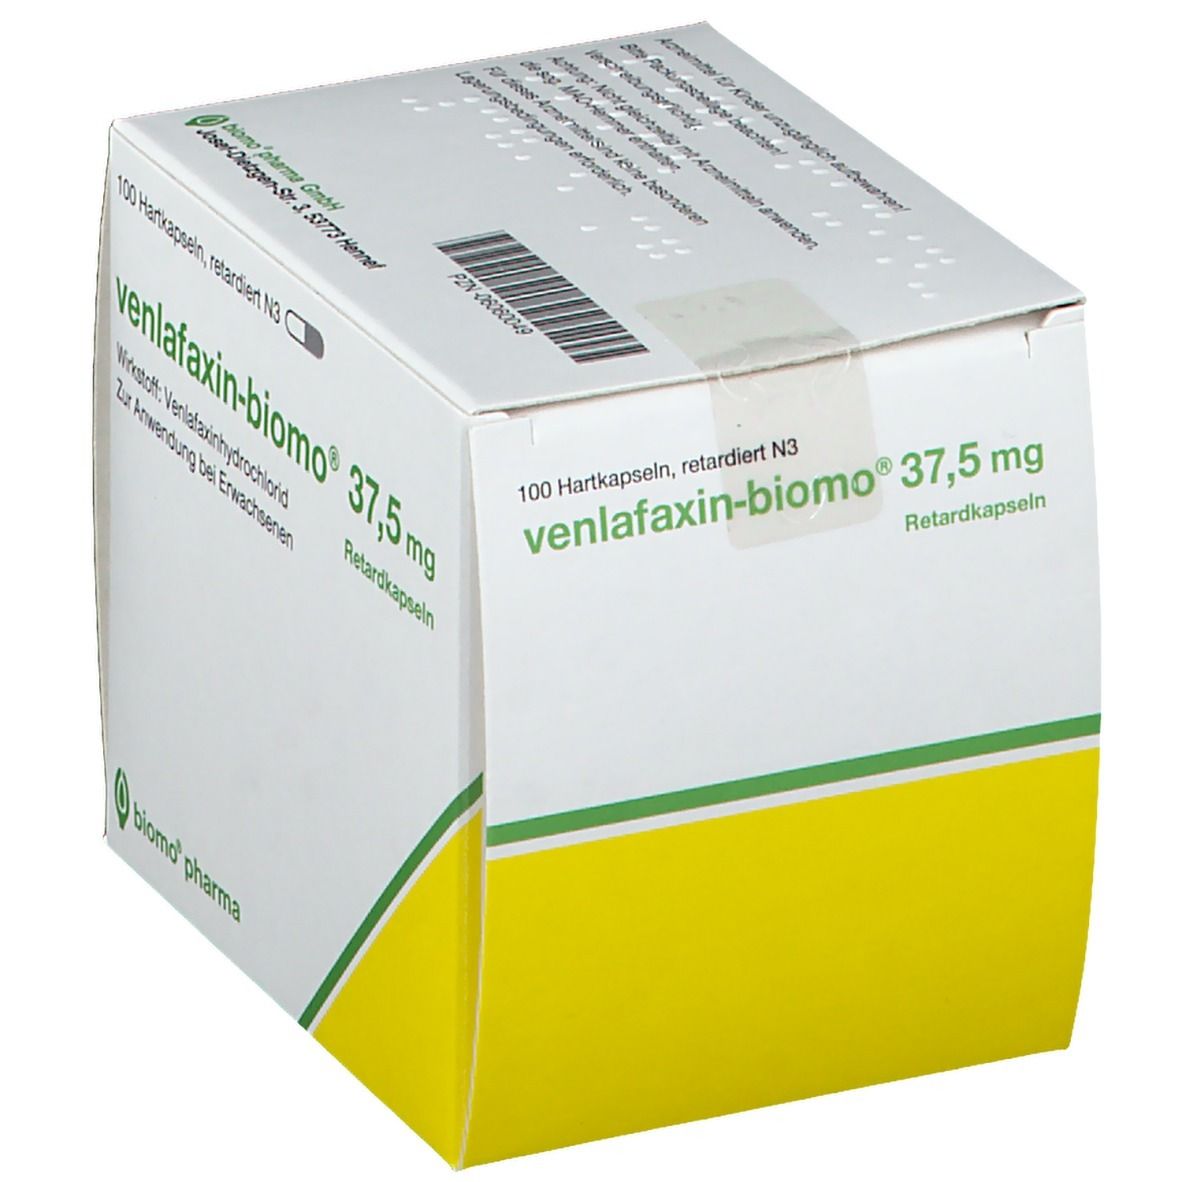 venlafaxin-biomo® 37,5 mg